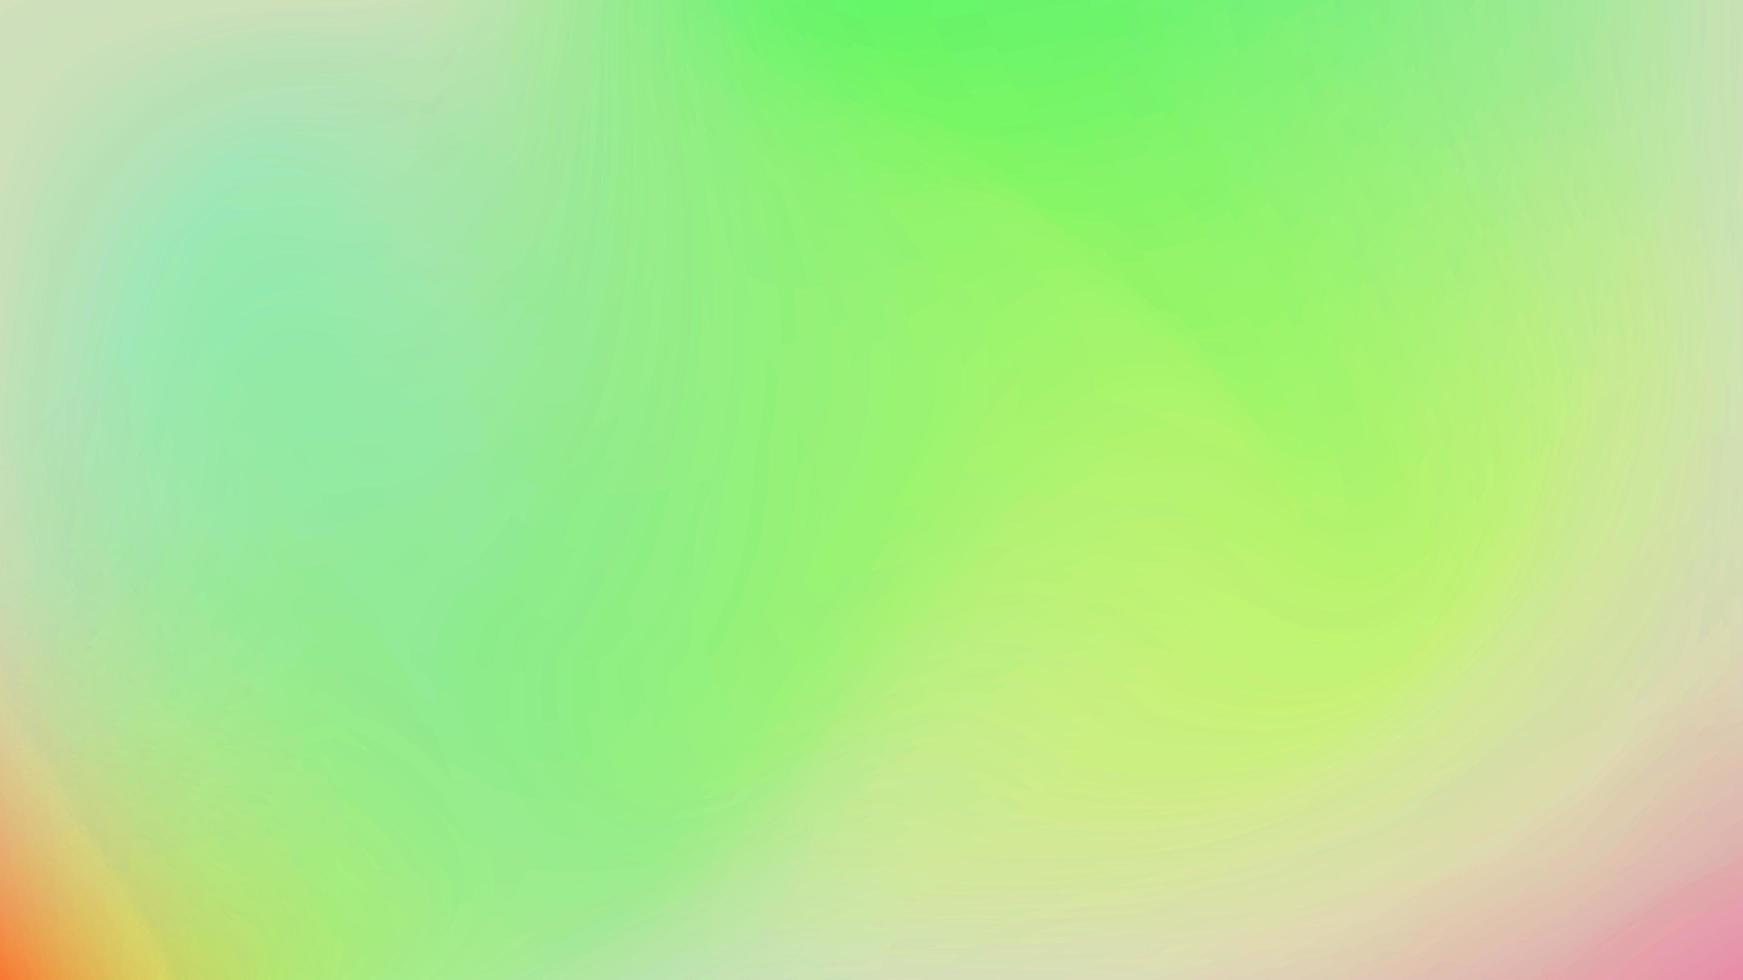 abstrato brilhante luz verde e laranja turva gradiente bolha círculo padrão brilhante colorido com gradiente gráfico suave. foto